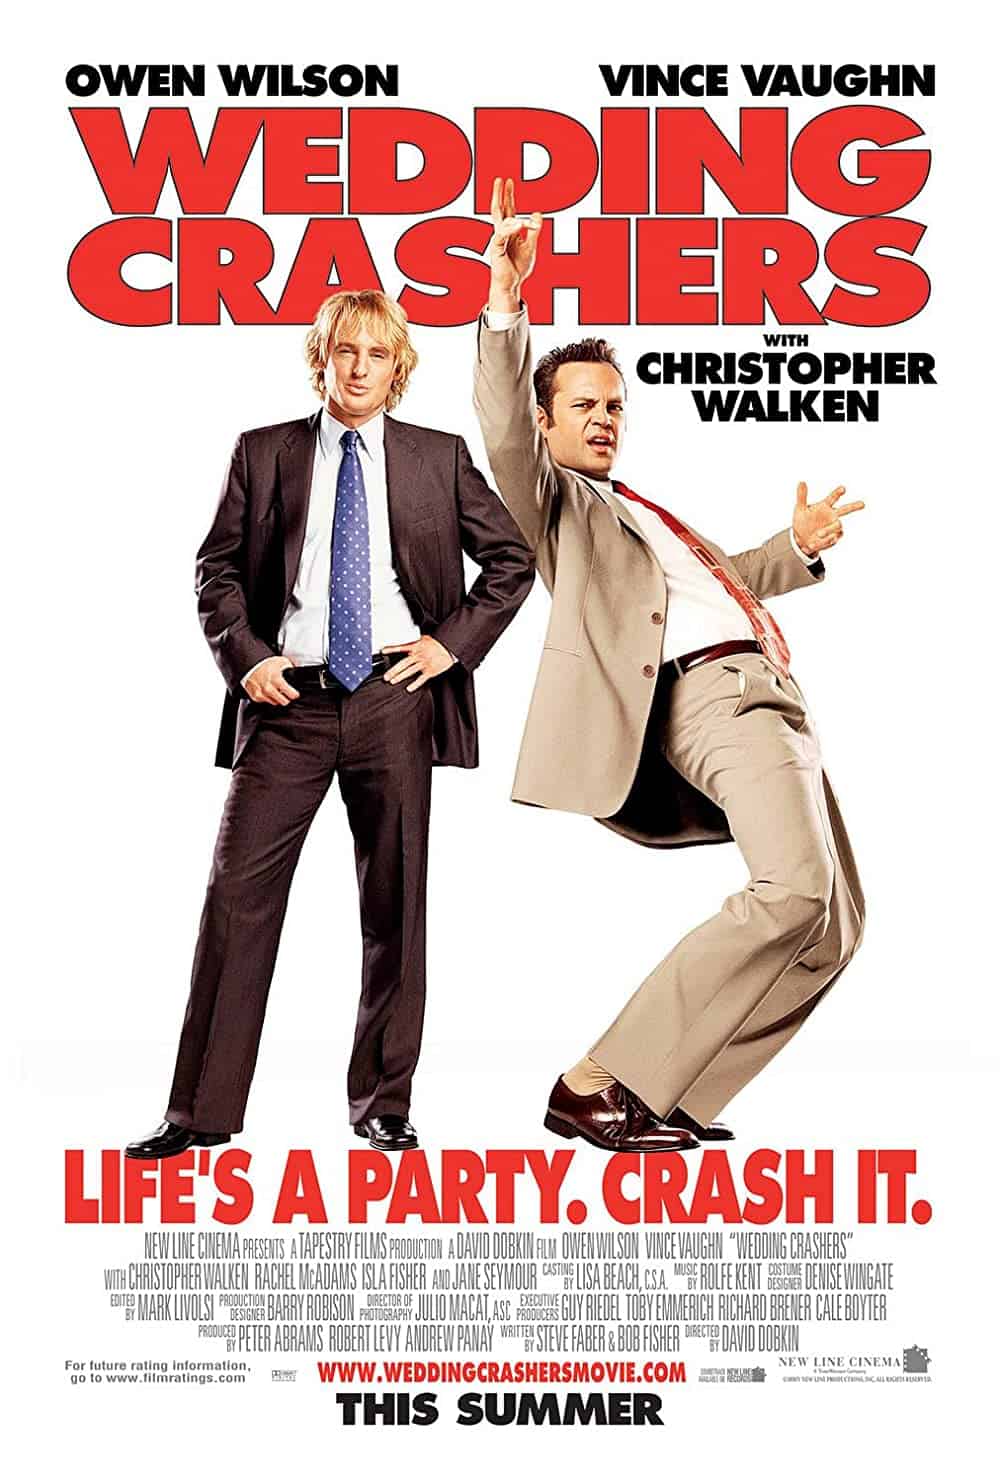 Crazy Rich Asians similar movie Wedding Crashers (2005)